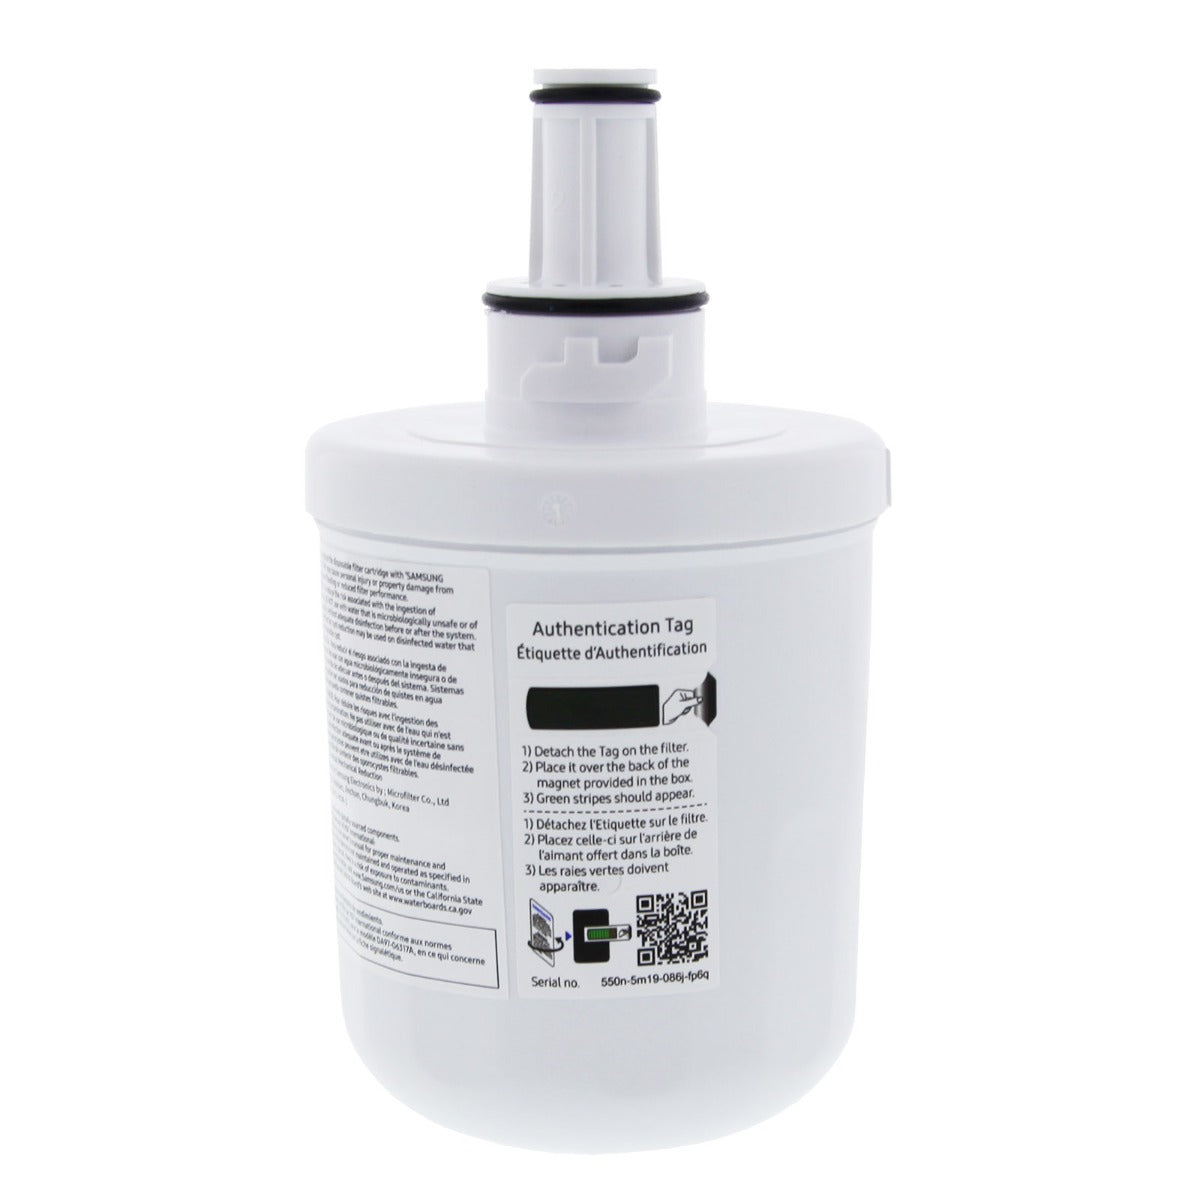 Samsung DA29-00003G Refrigerator Water Filter